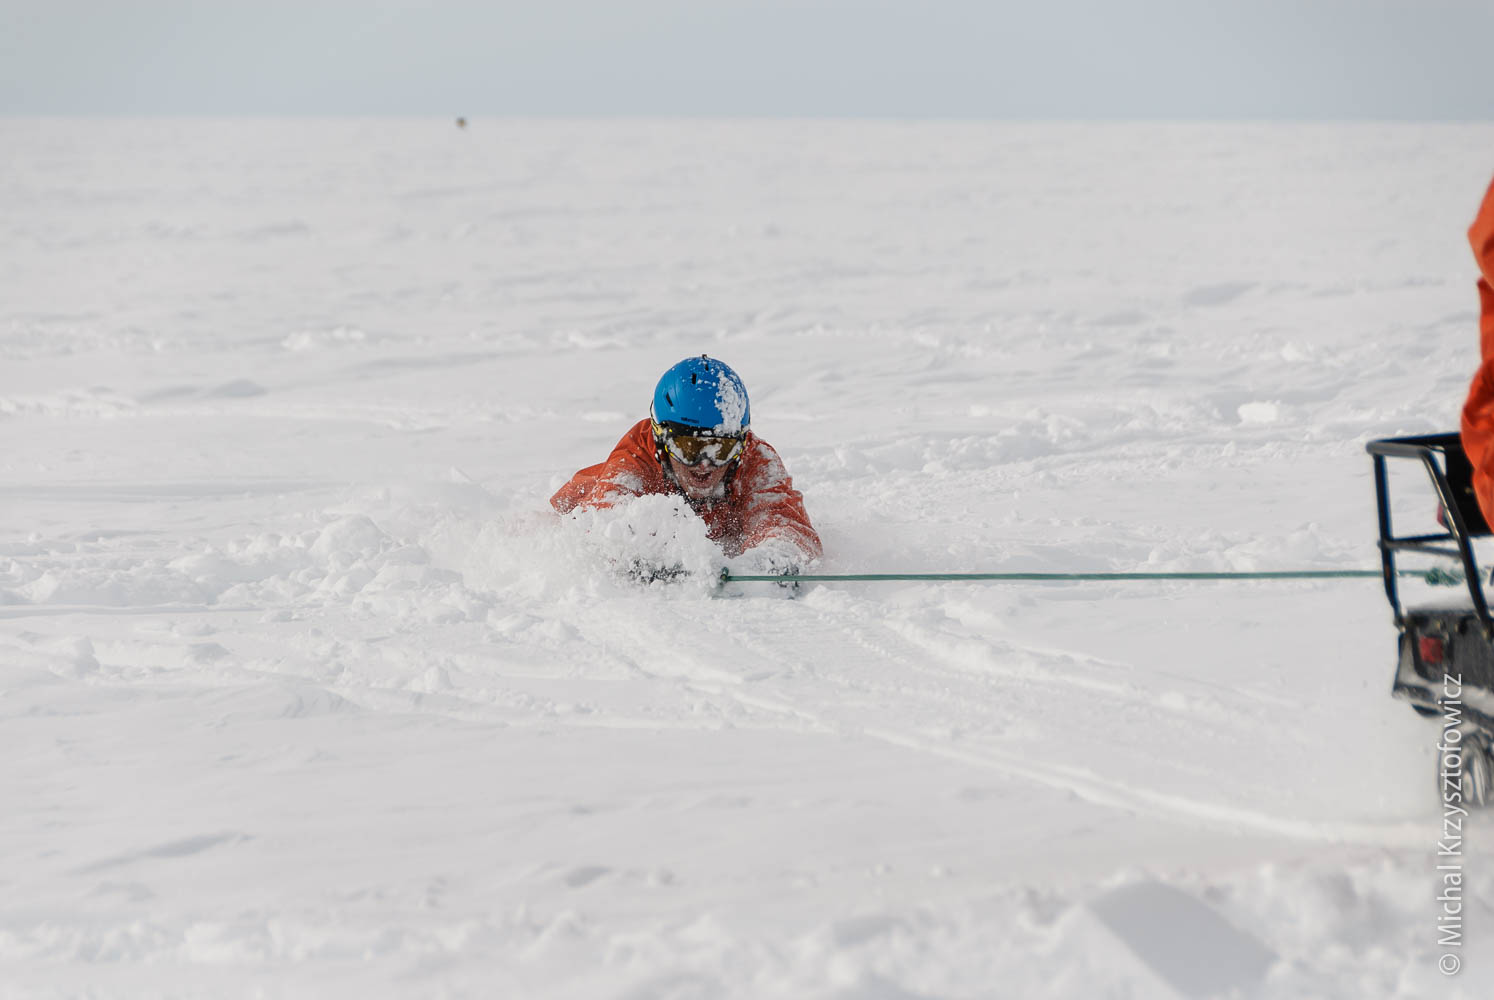 Christoph skijoring